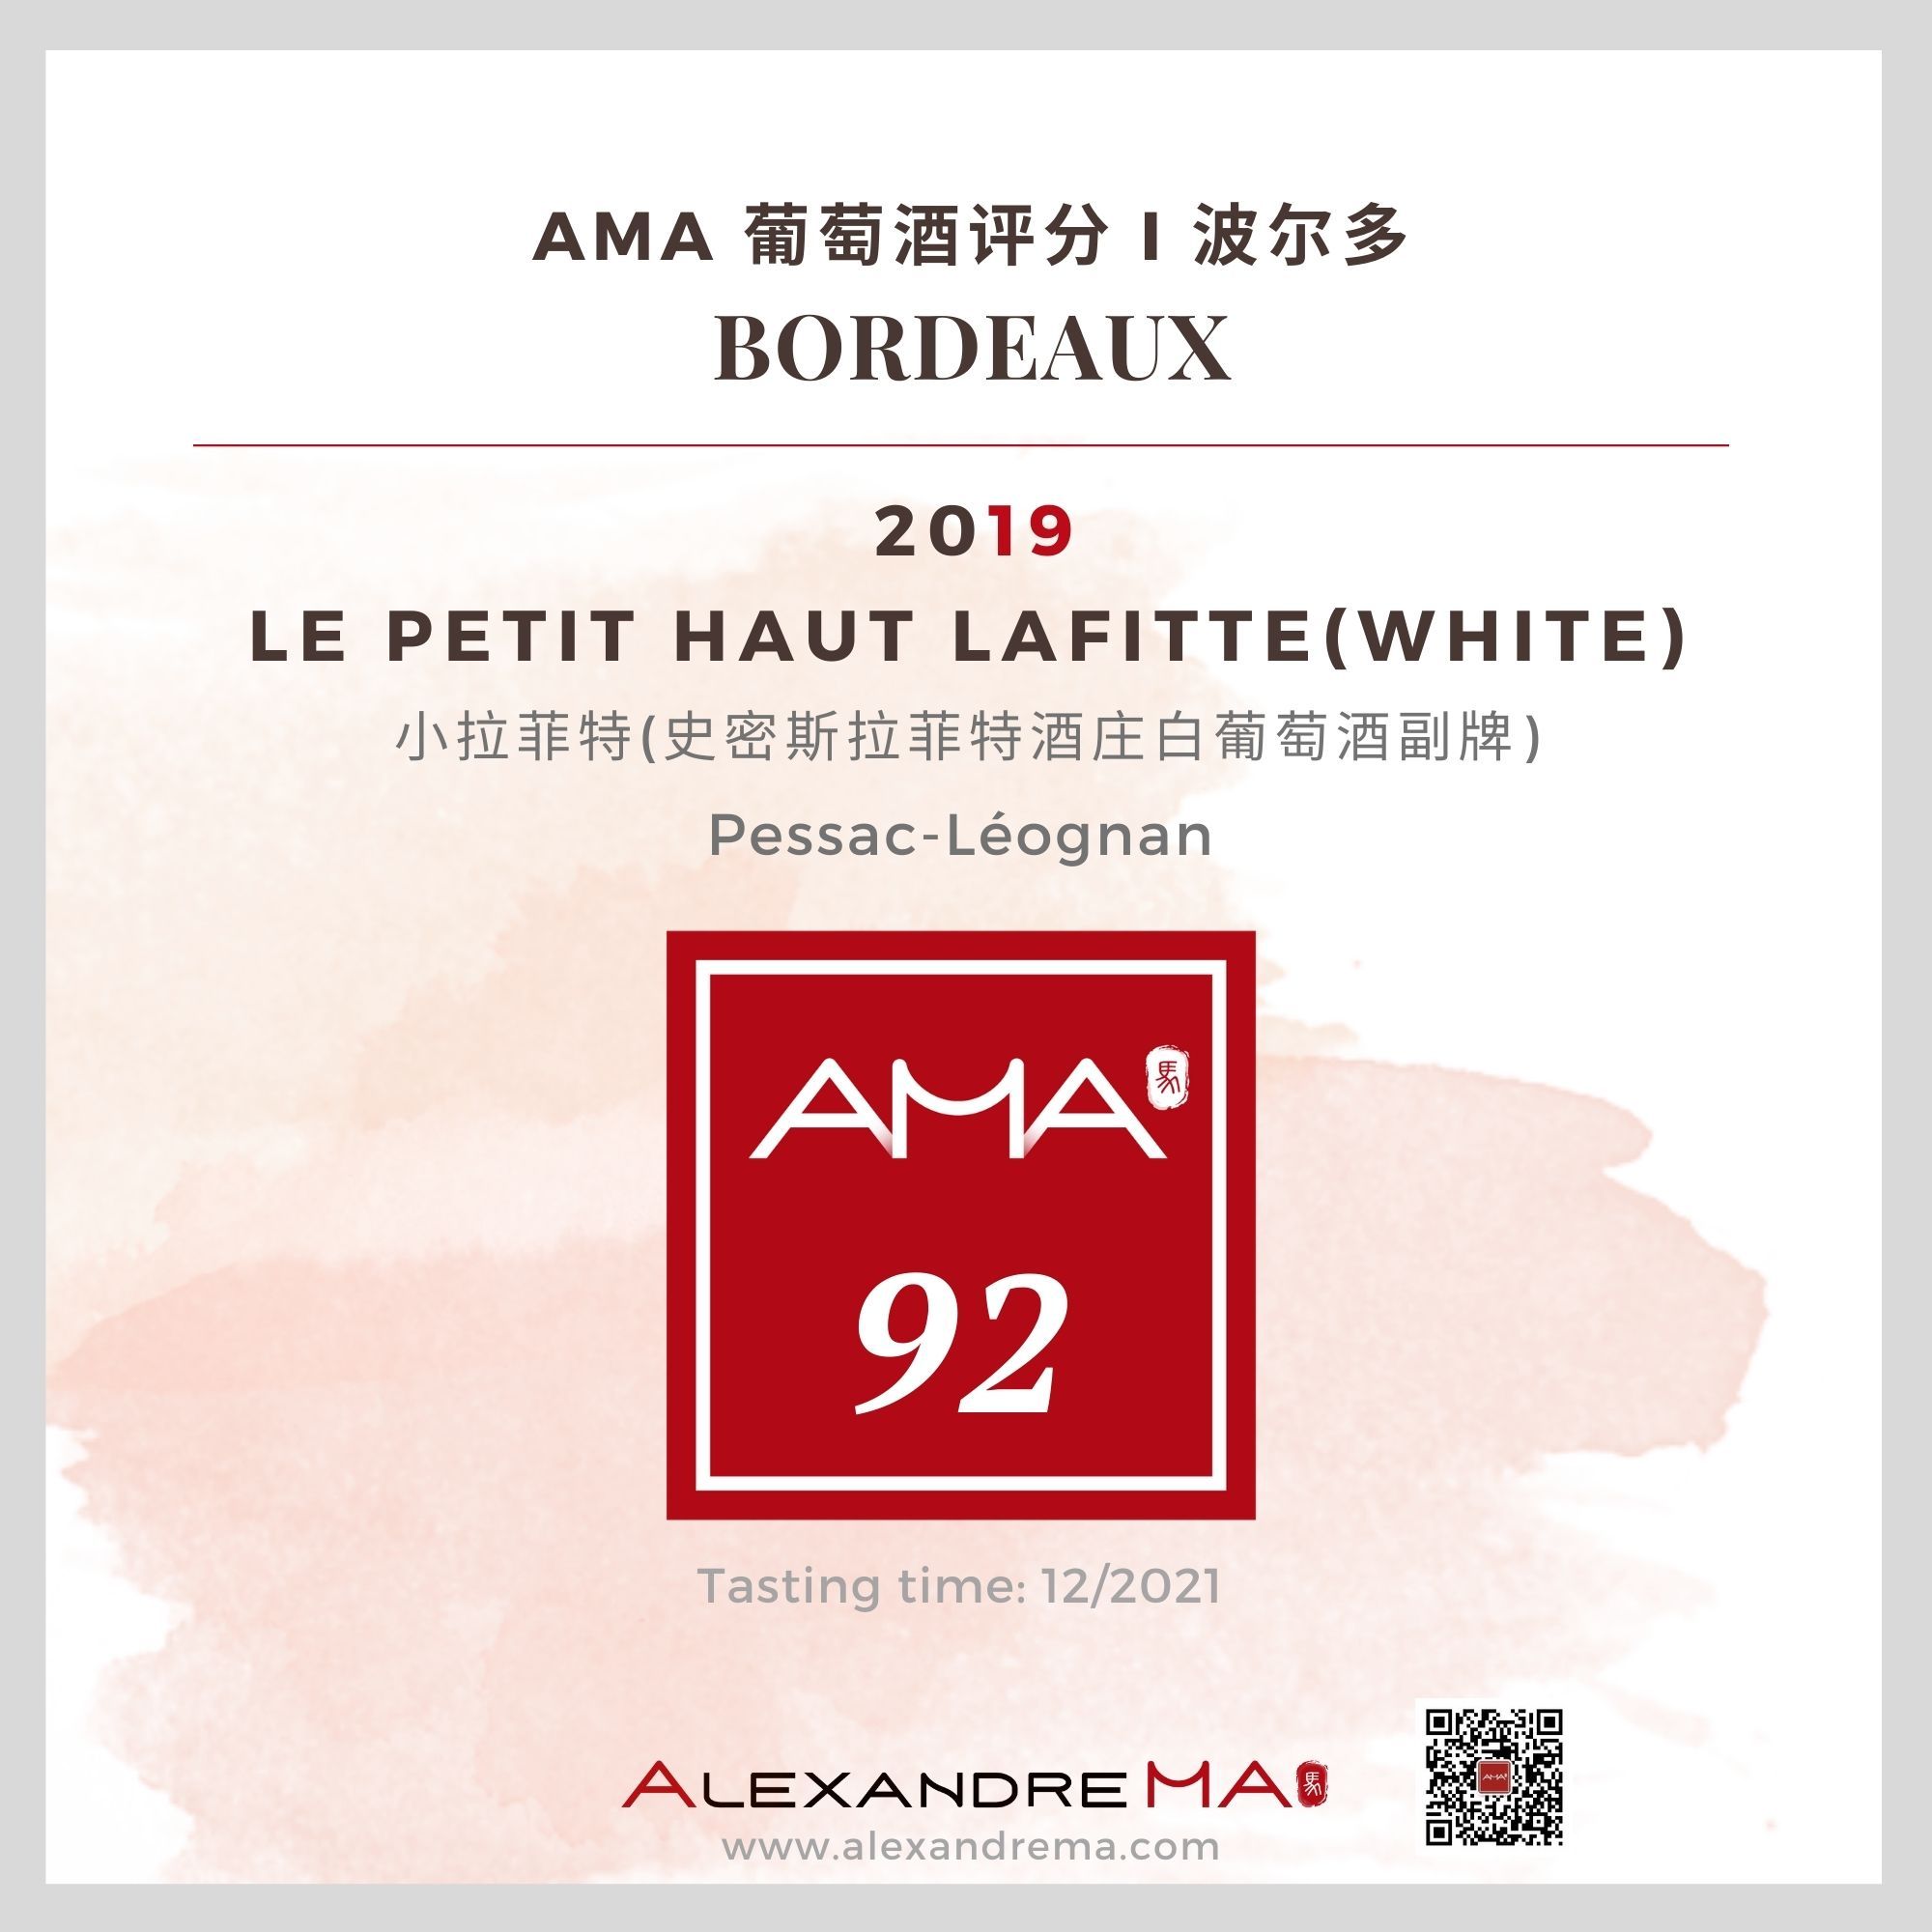 Le Petit Smith Haut Lafitte-White-2019 - Alexandre MA